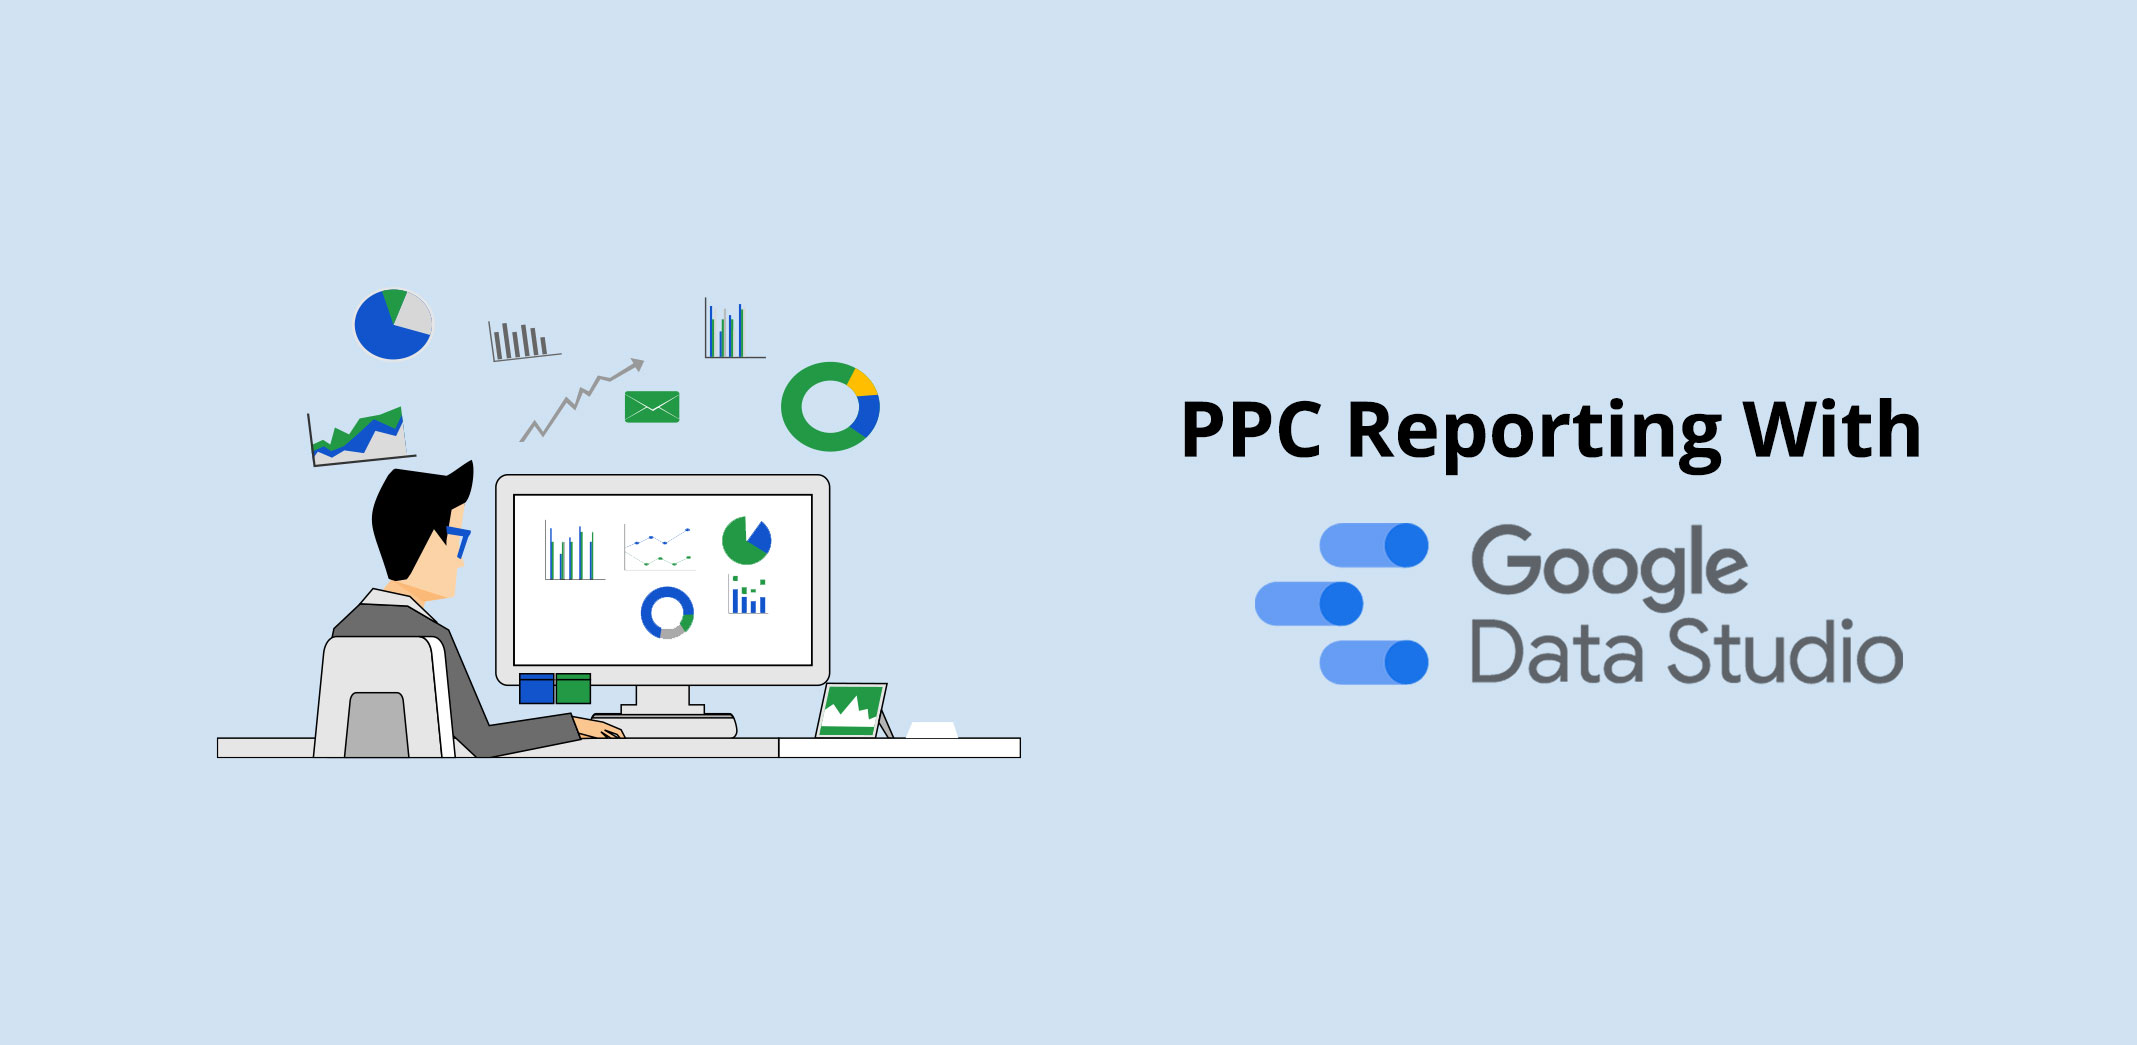 PPC Reporting With Google Data Studio